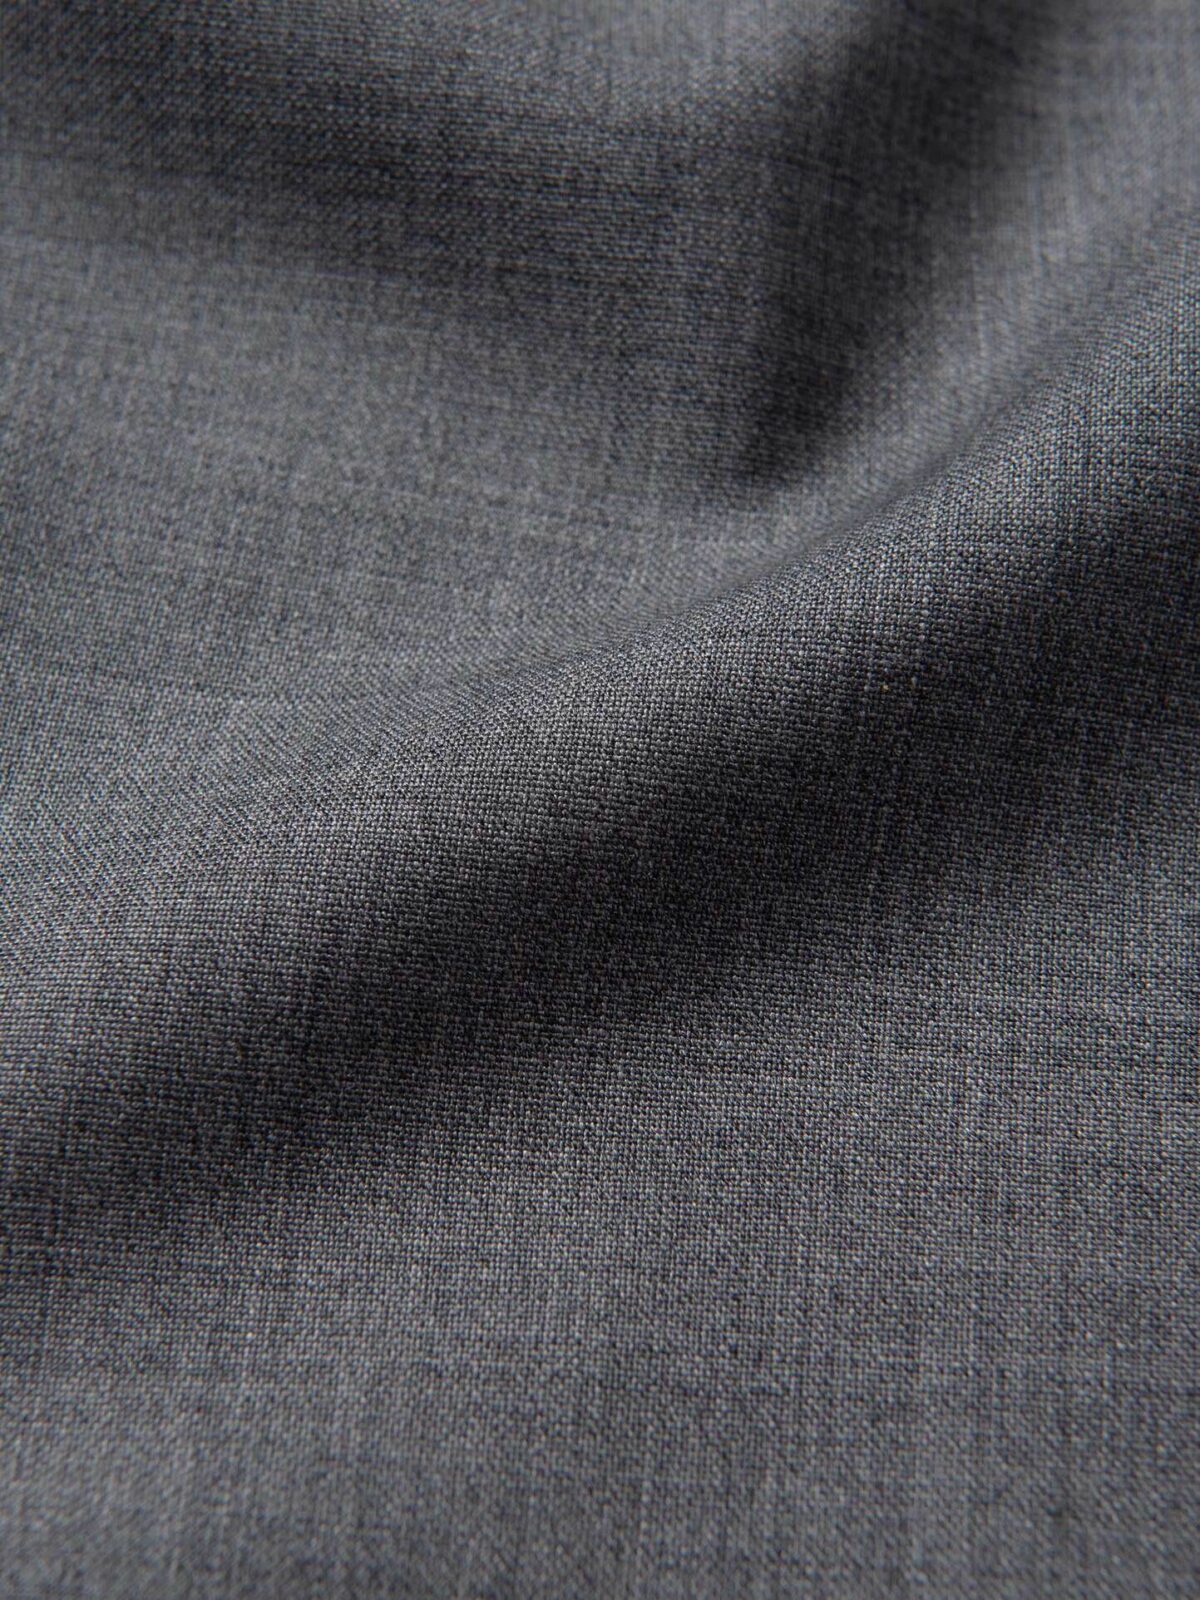 Reda Grey Melange Merino Wool Shirts by Proper Cloth